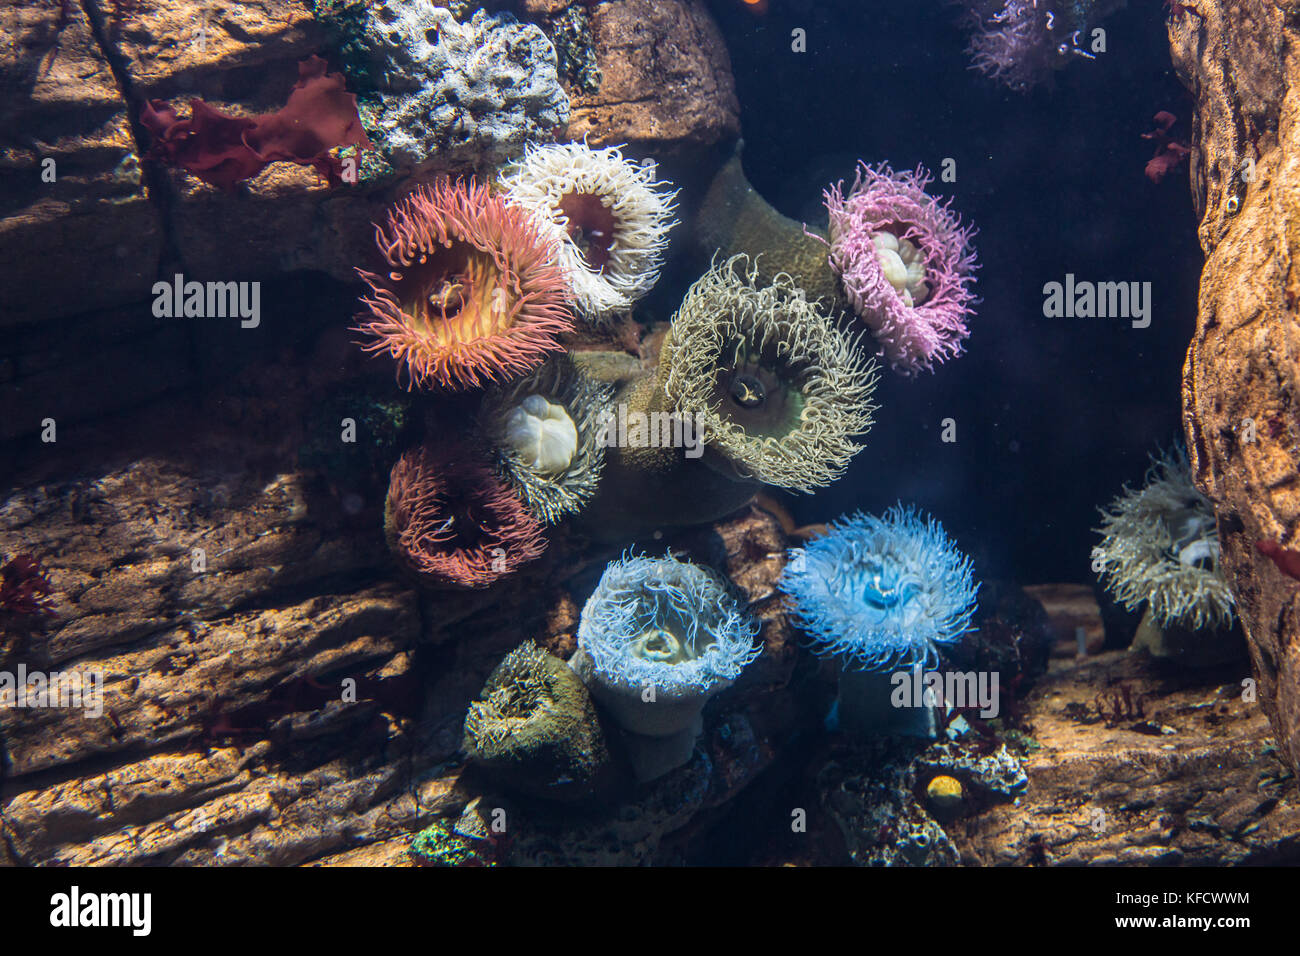 Aquatic Plants and Bubble-tip Anemone inside Aquarium. Stock Photo